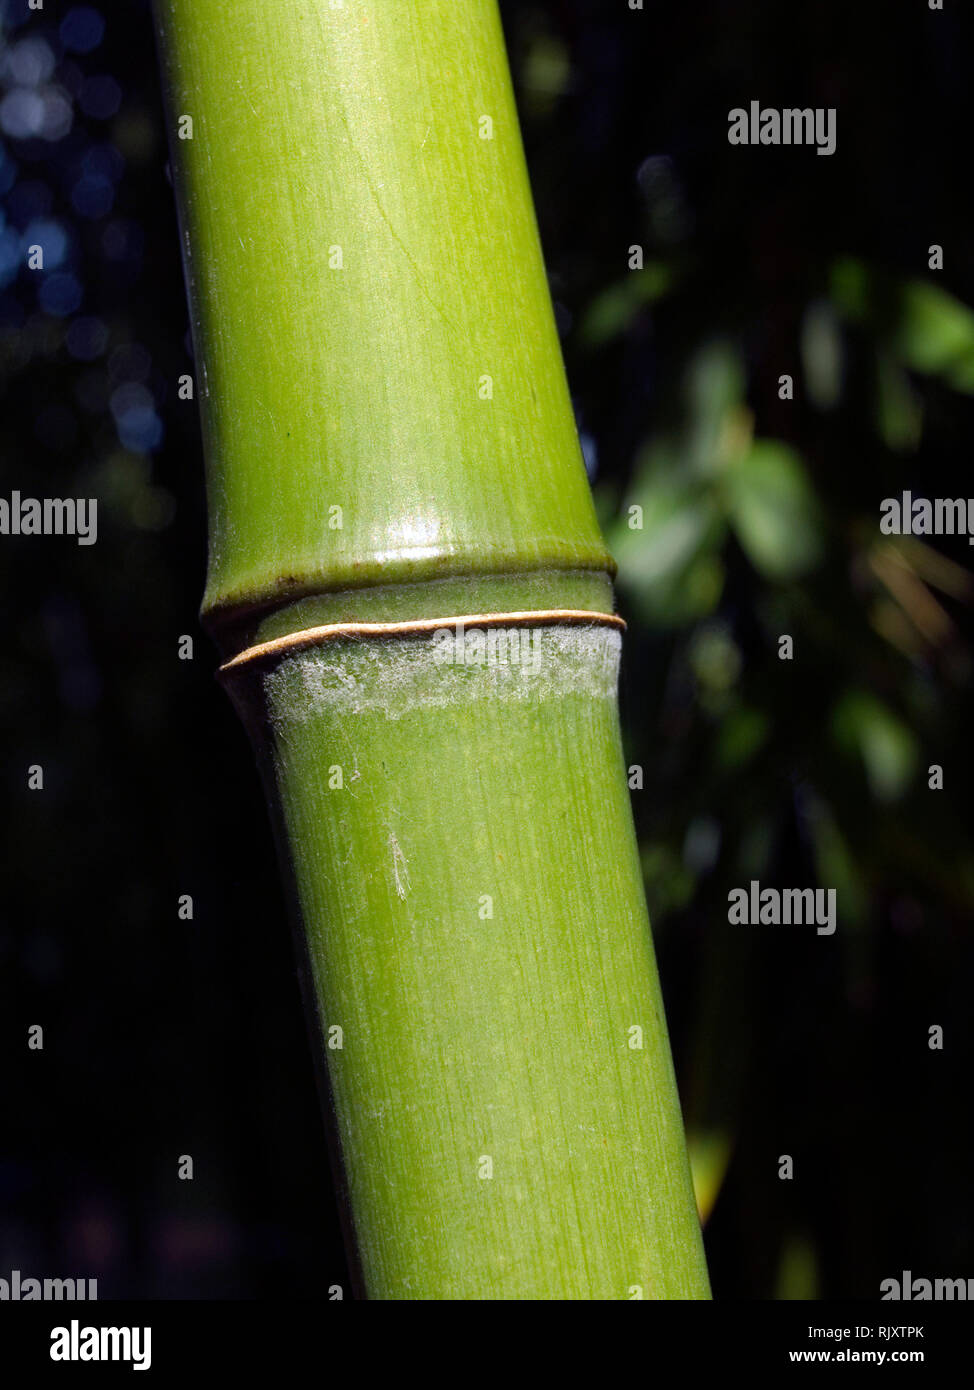 Verde di bambù Glaucous Foto Stock